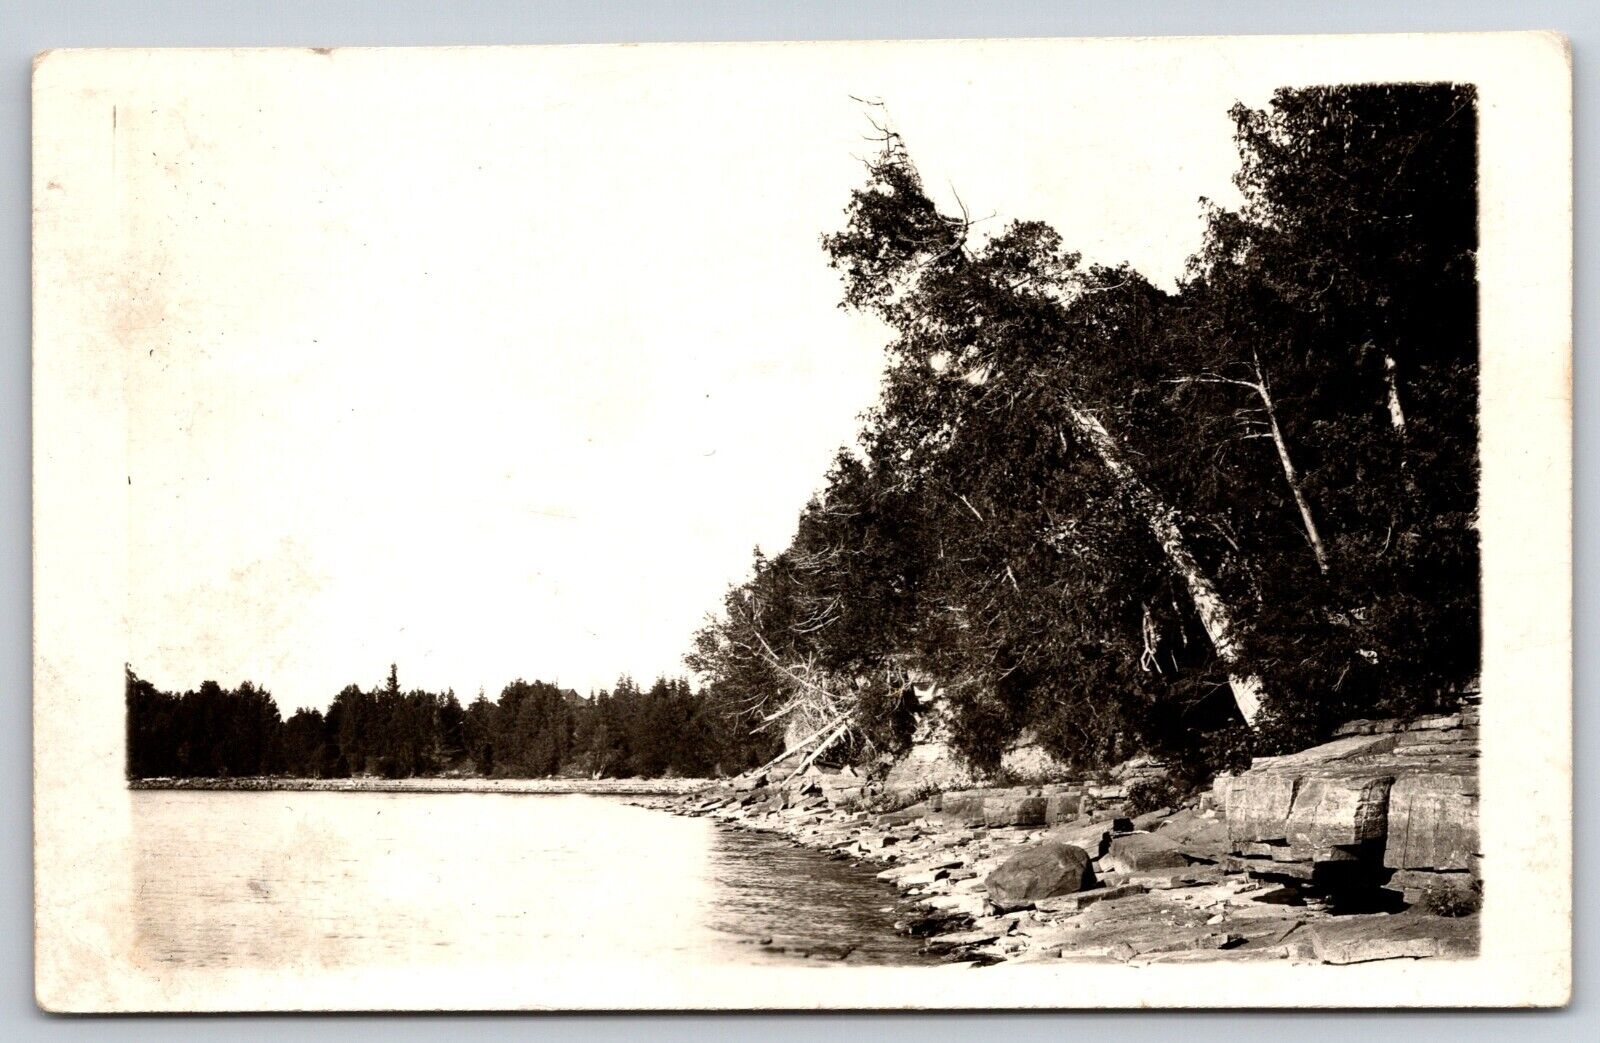 Lake - Fallen Trees - Chester, VT - Vermont - RPPC - Real Photo Postcard - 1942